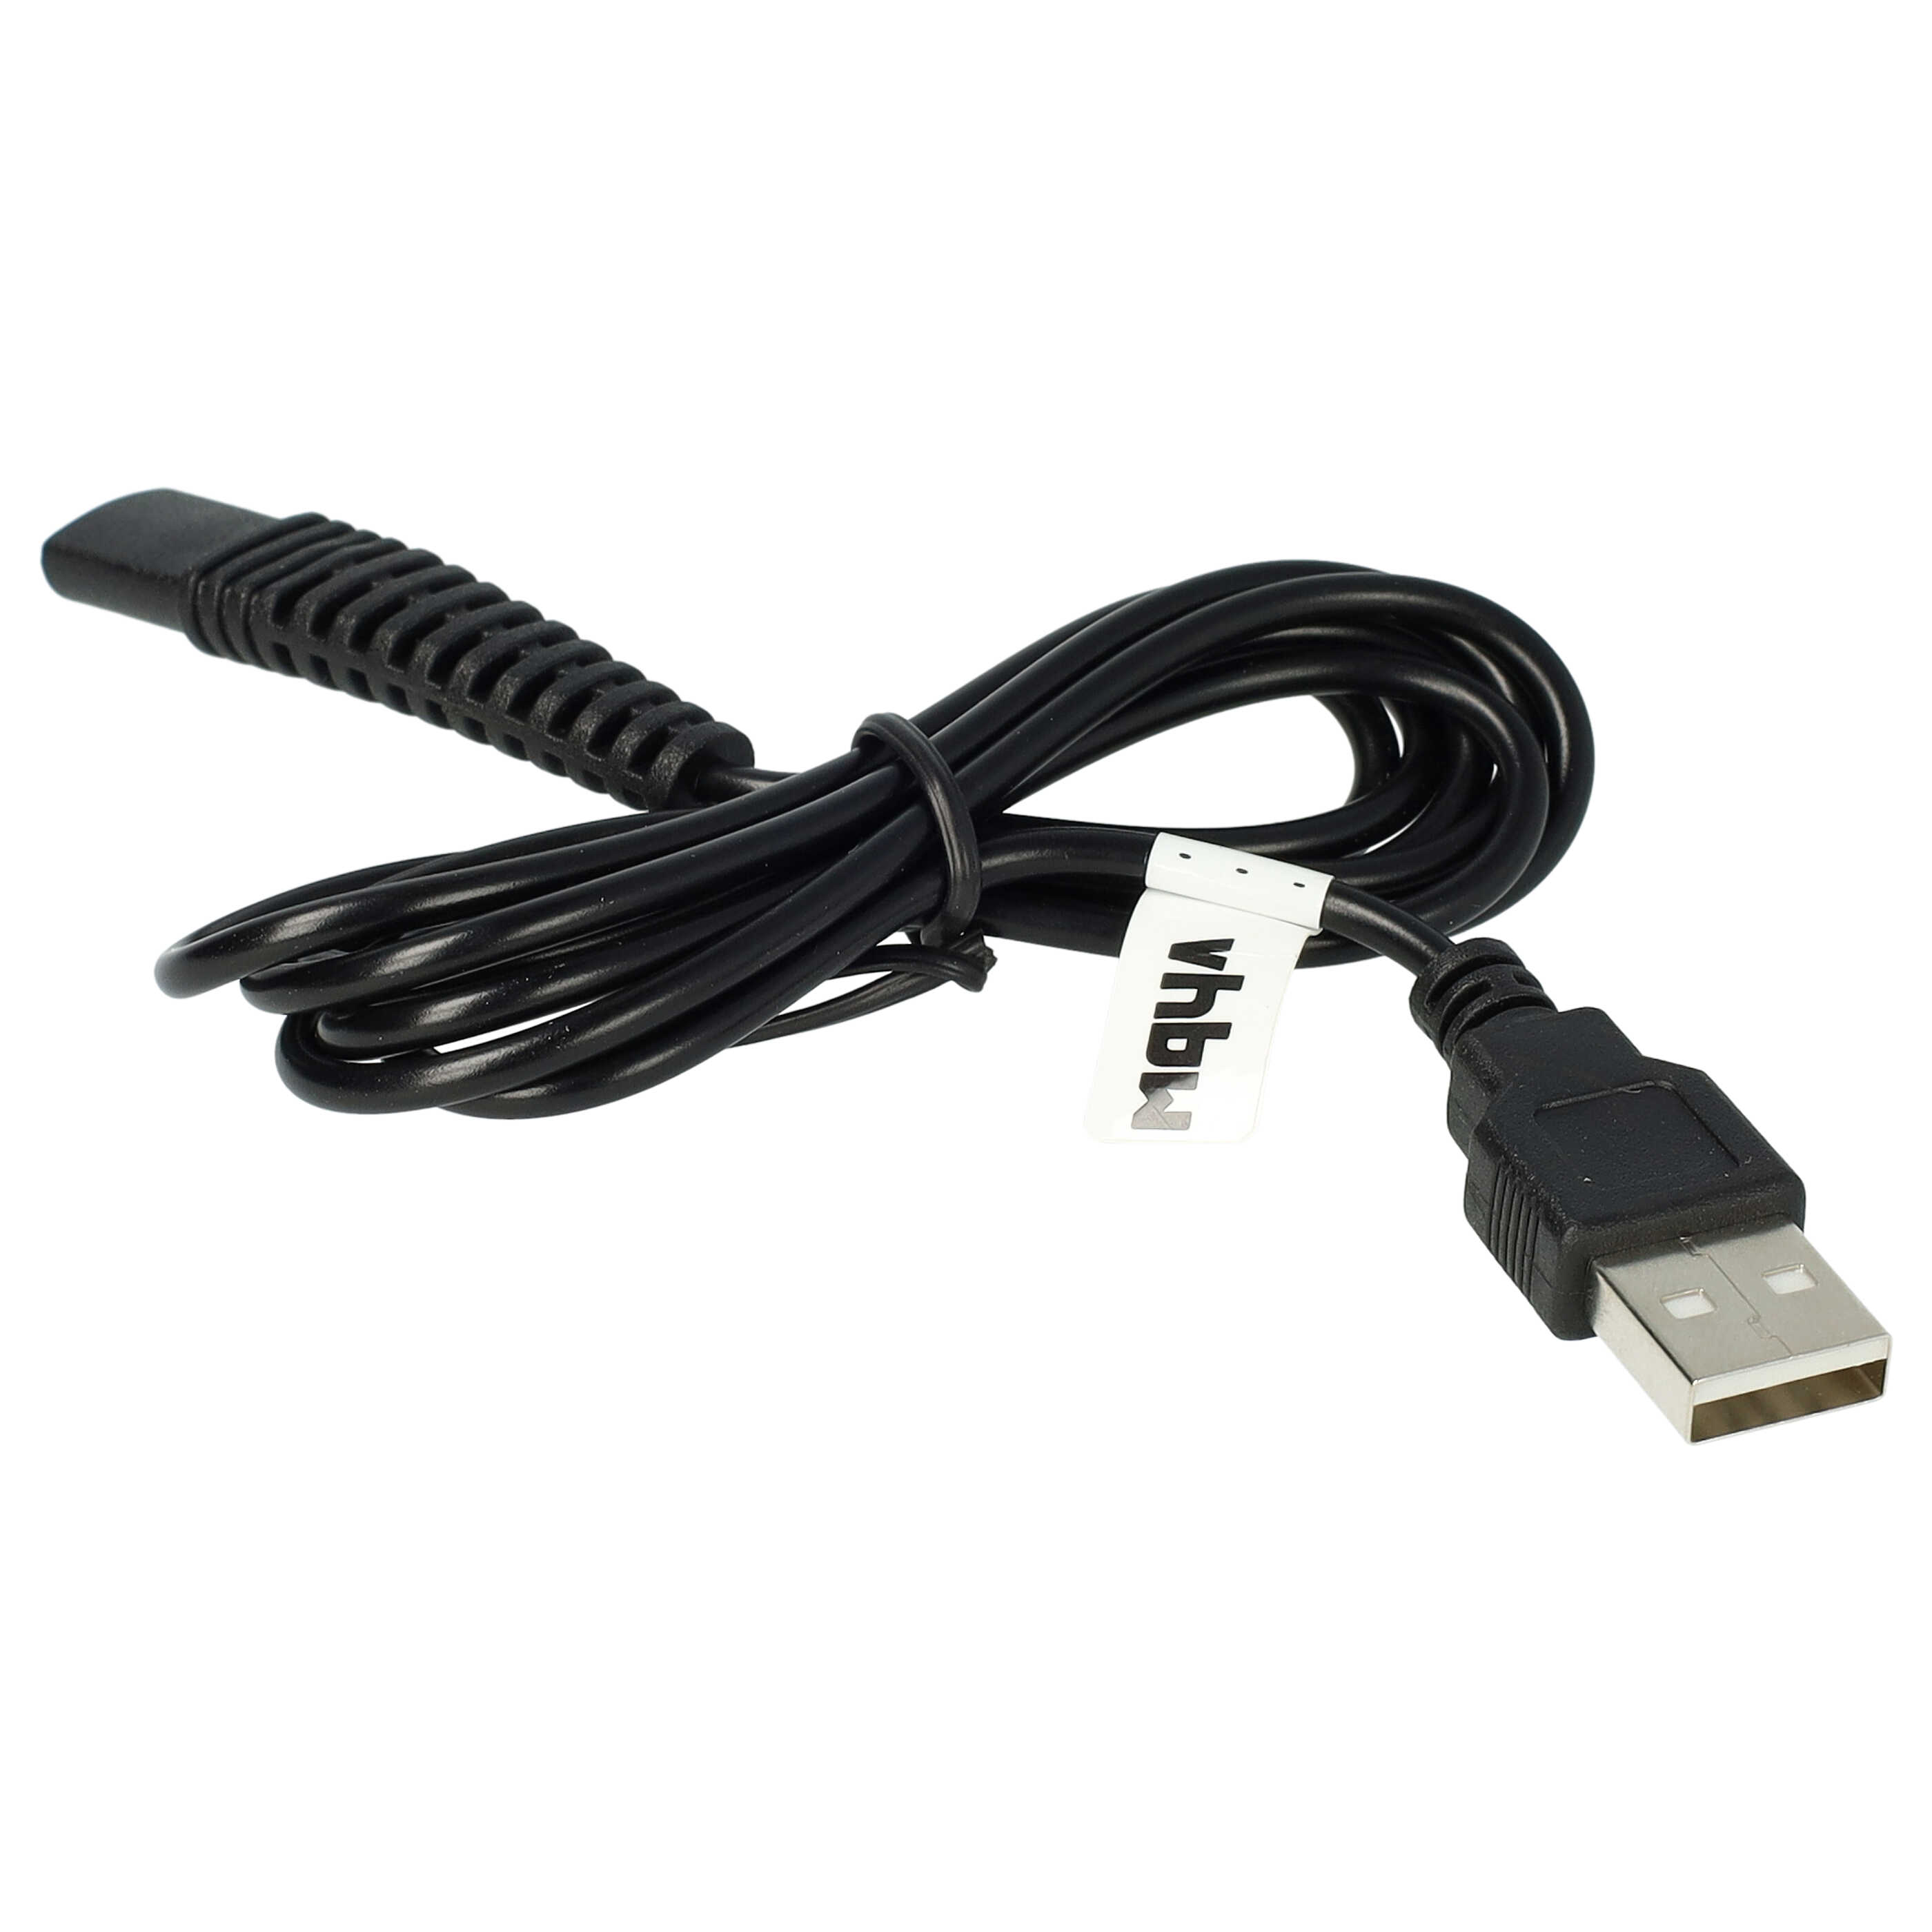 Caricabatterie USB per rasoio, spazzolino Braun, Oral-B HC20 (5611) - 120 cm